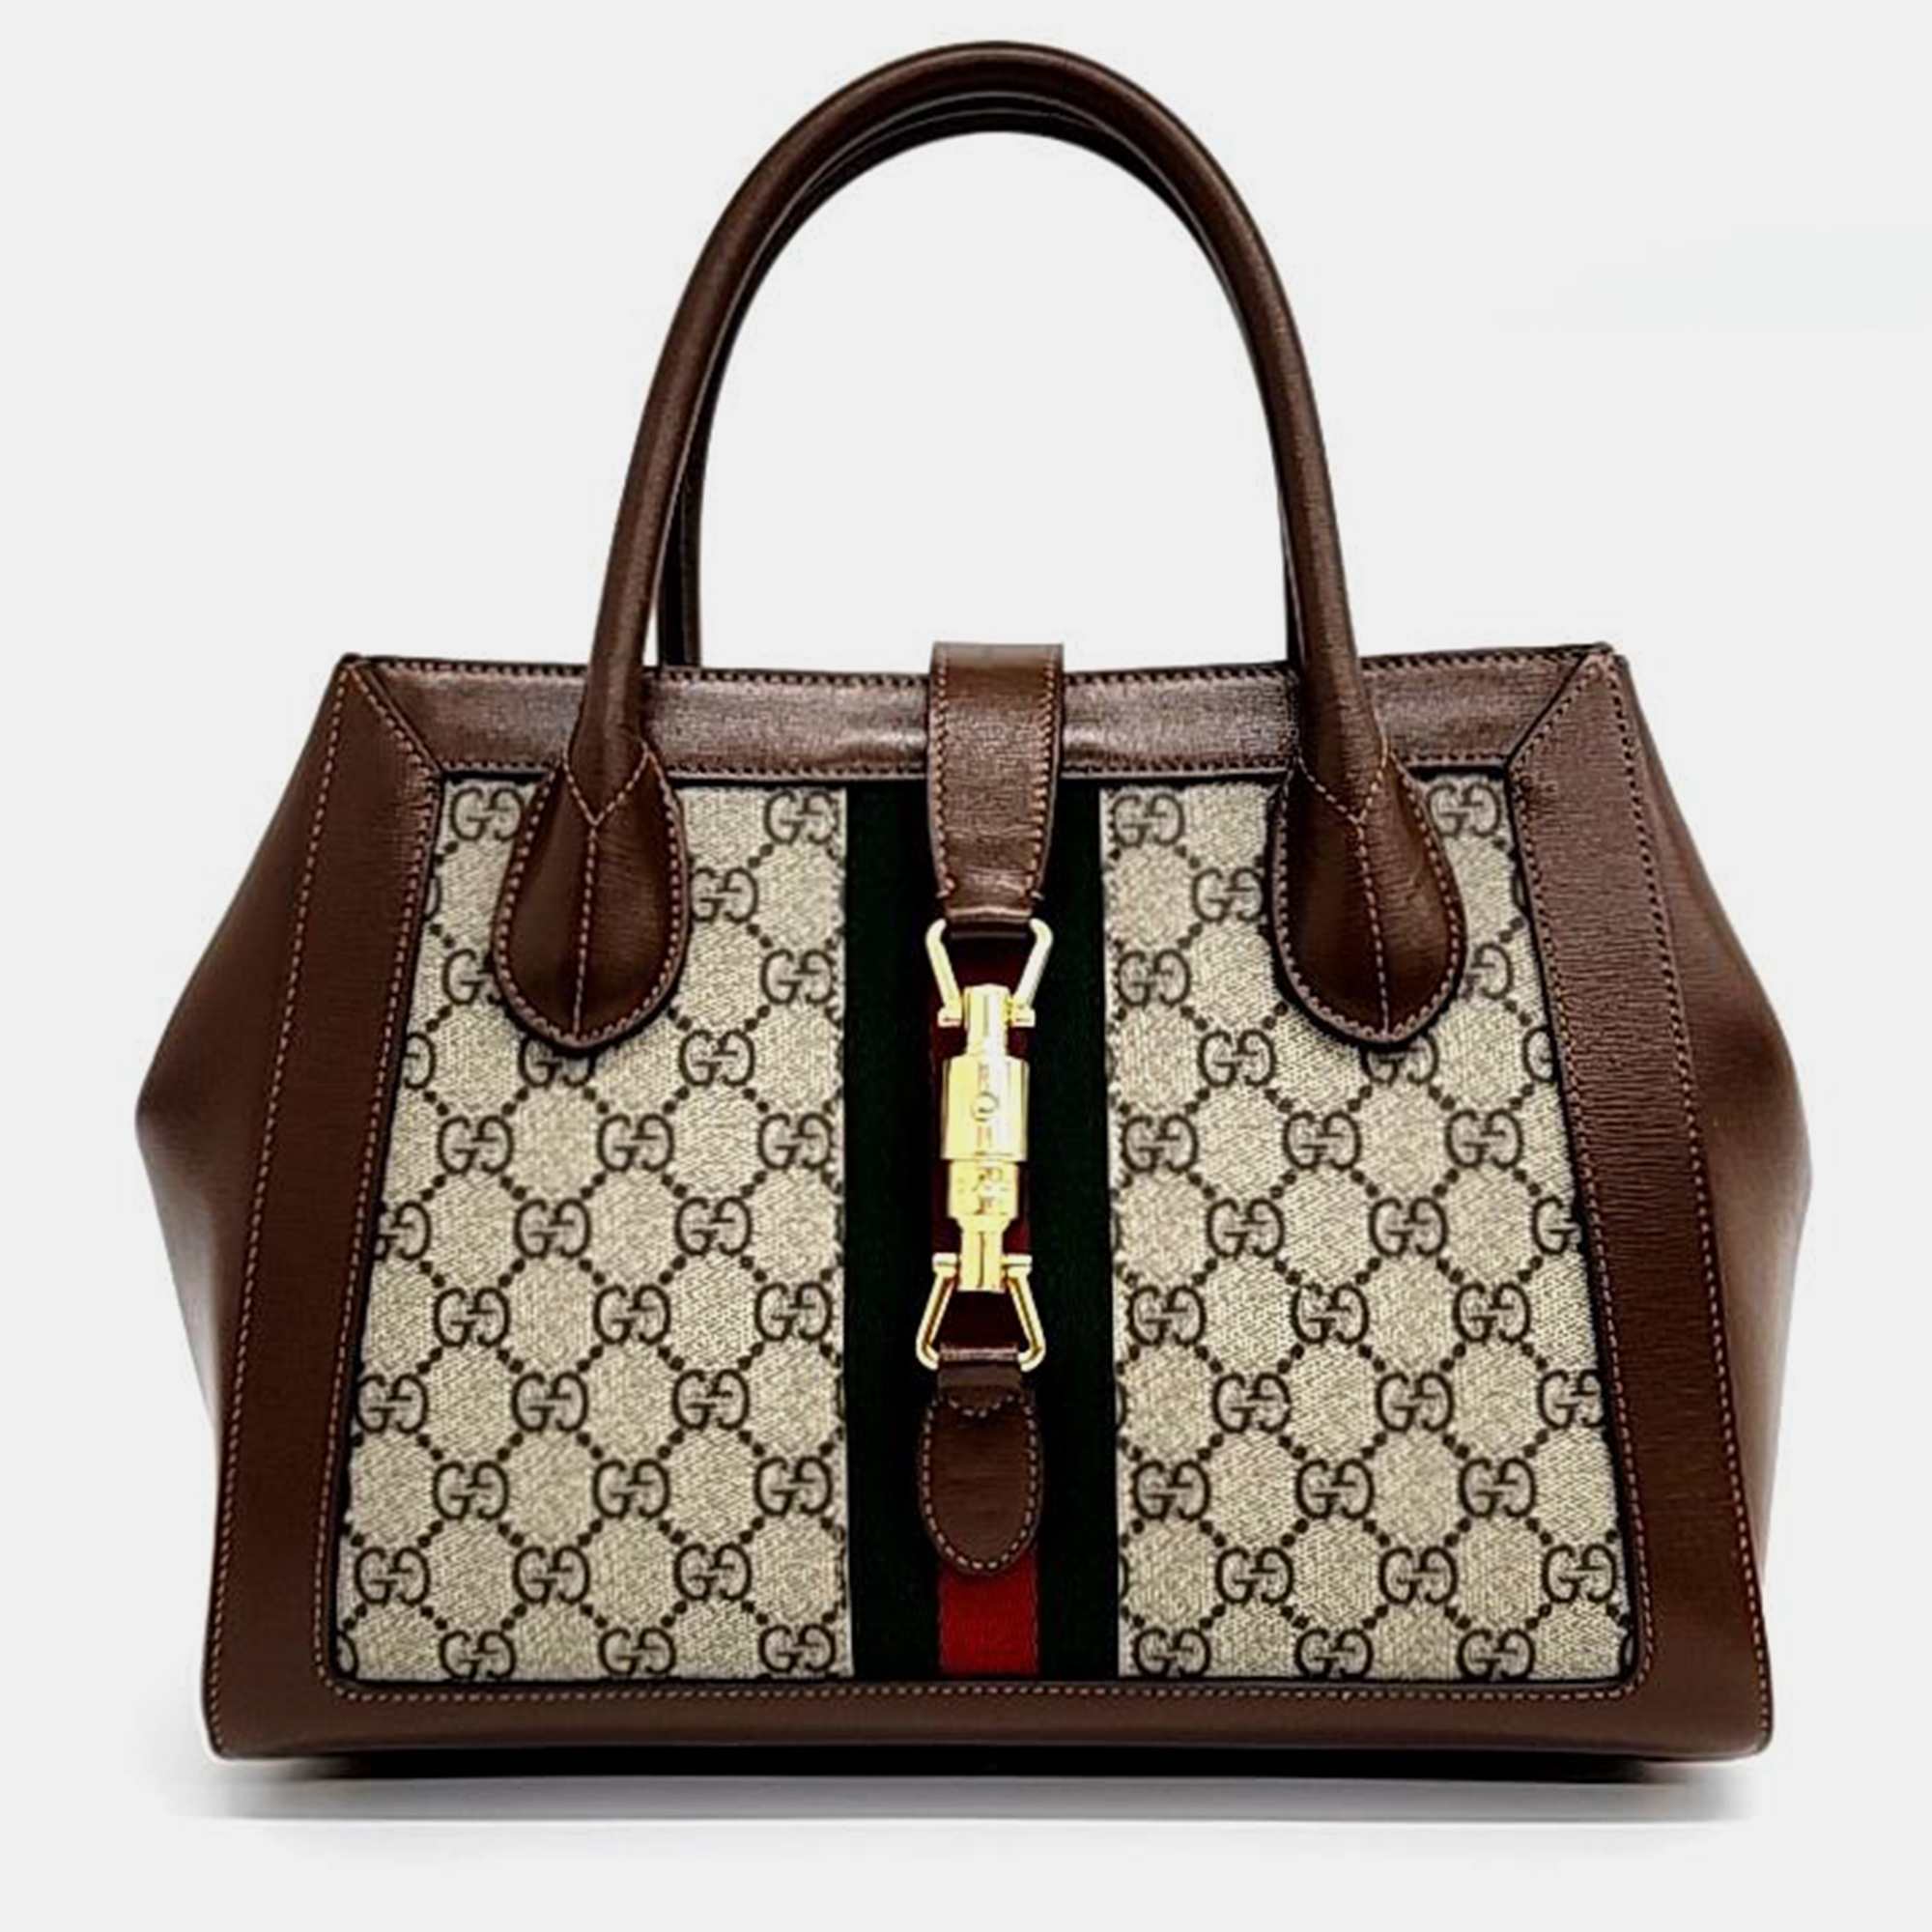 Gucci jackie 1961 medium tote handbag (649016)